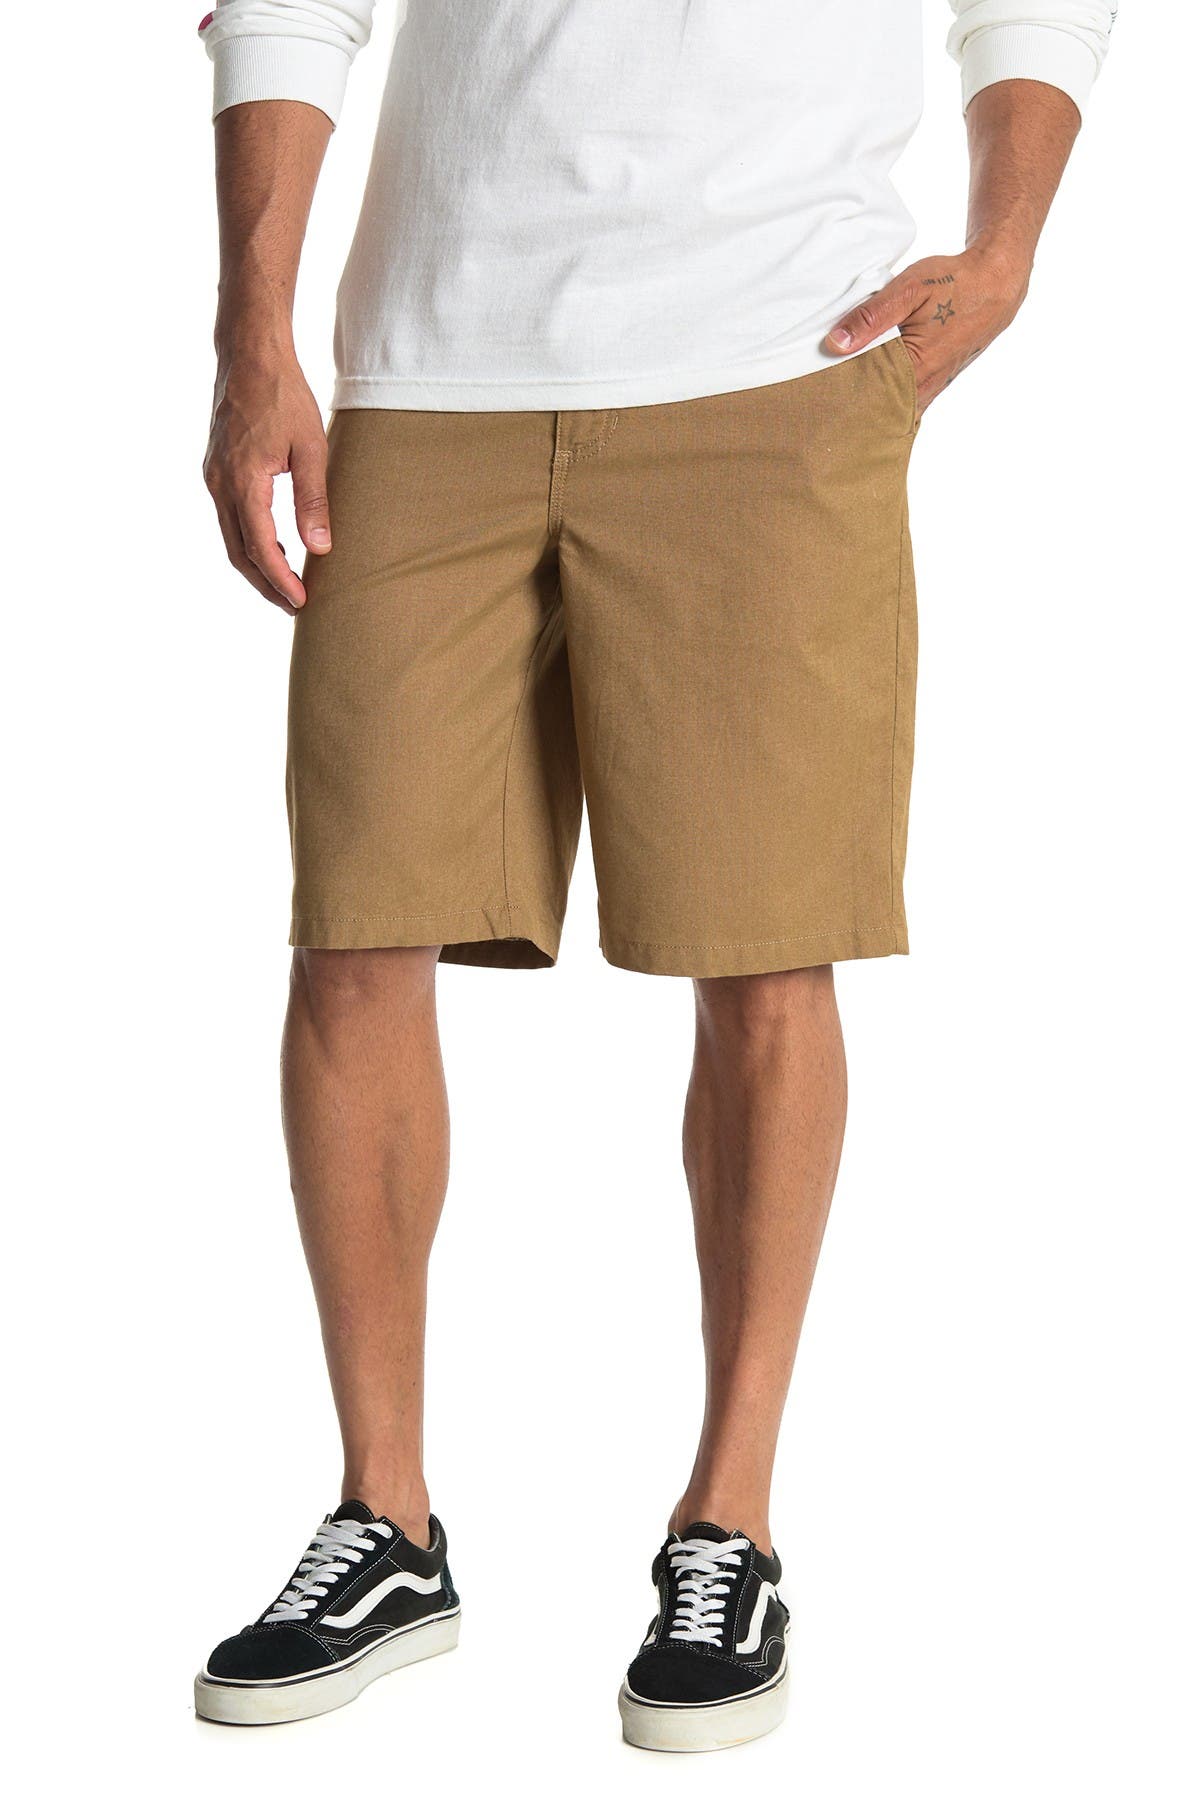 vans dewitt shorts